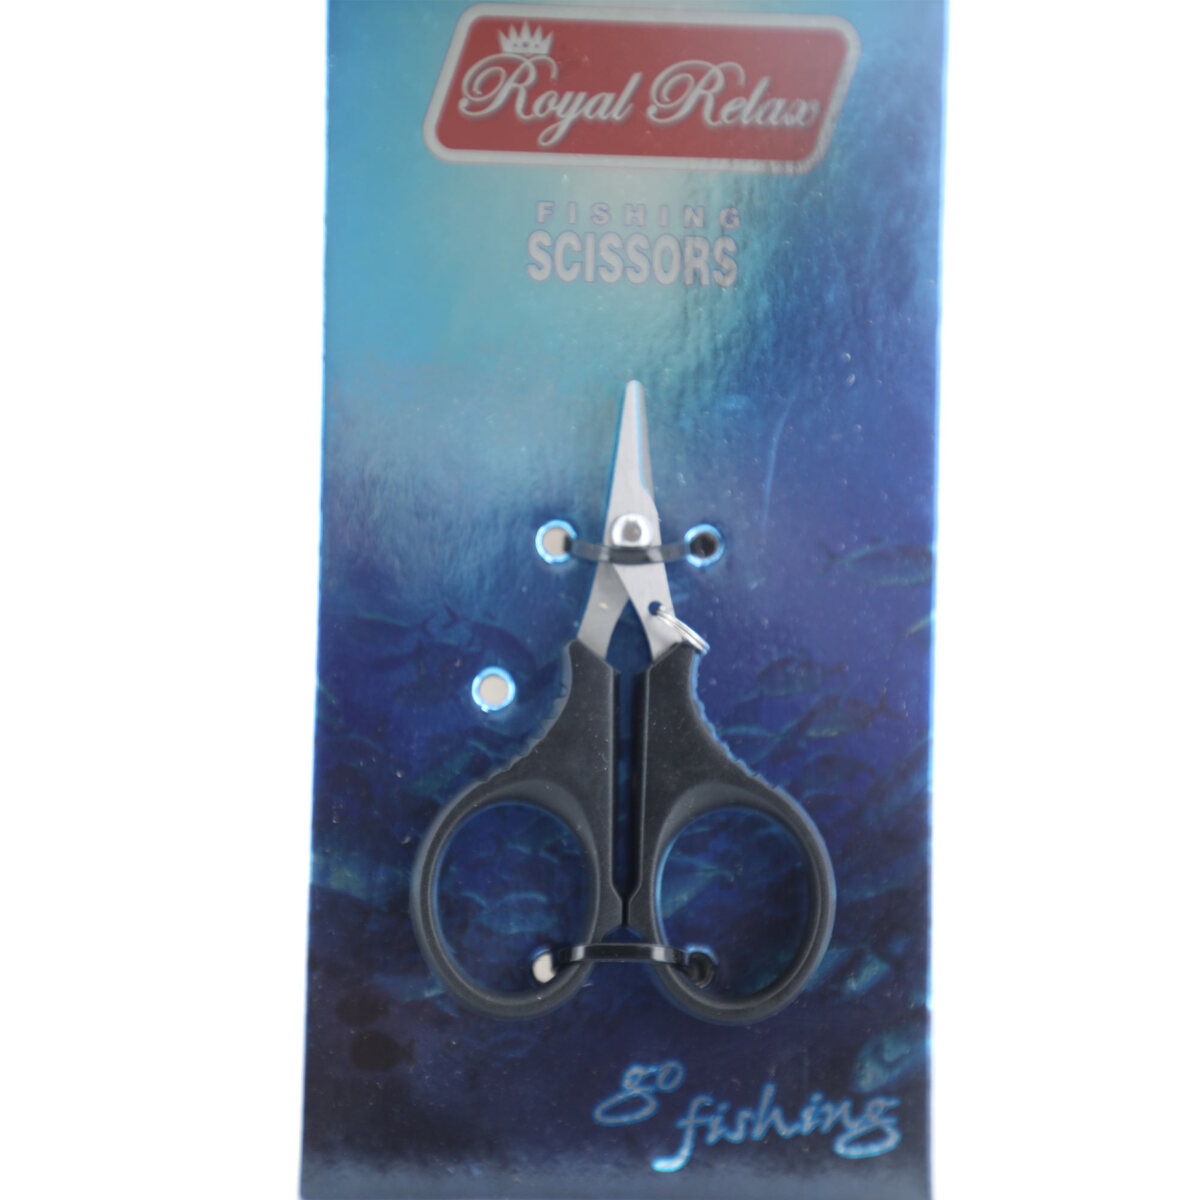 Royal Relax Fishing Scissors 154A